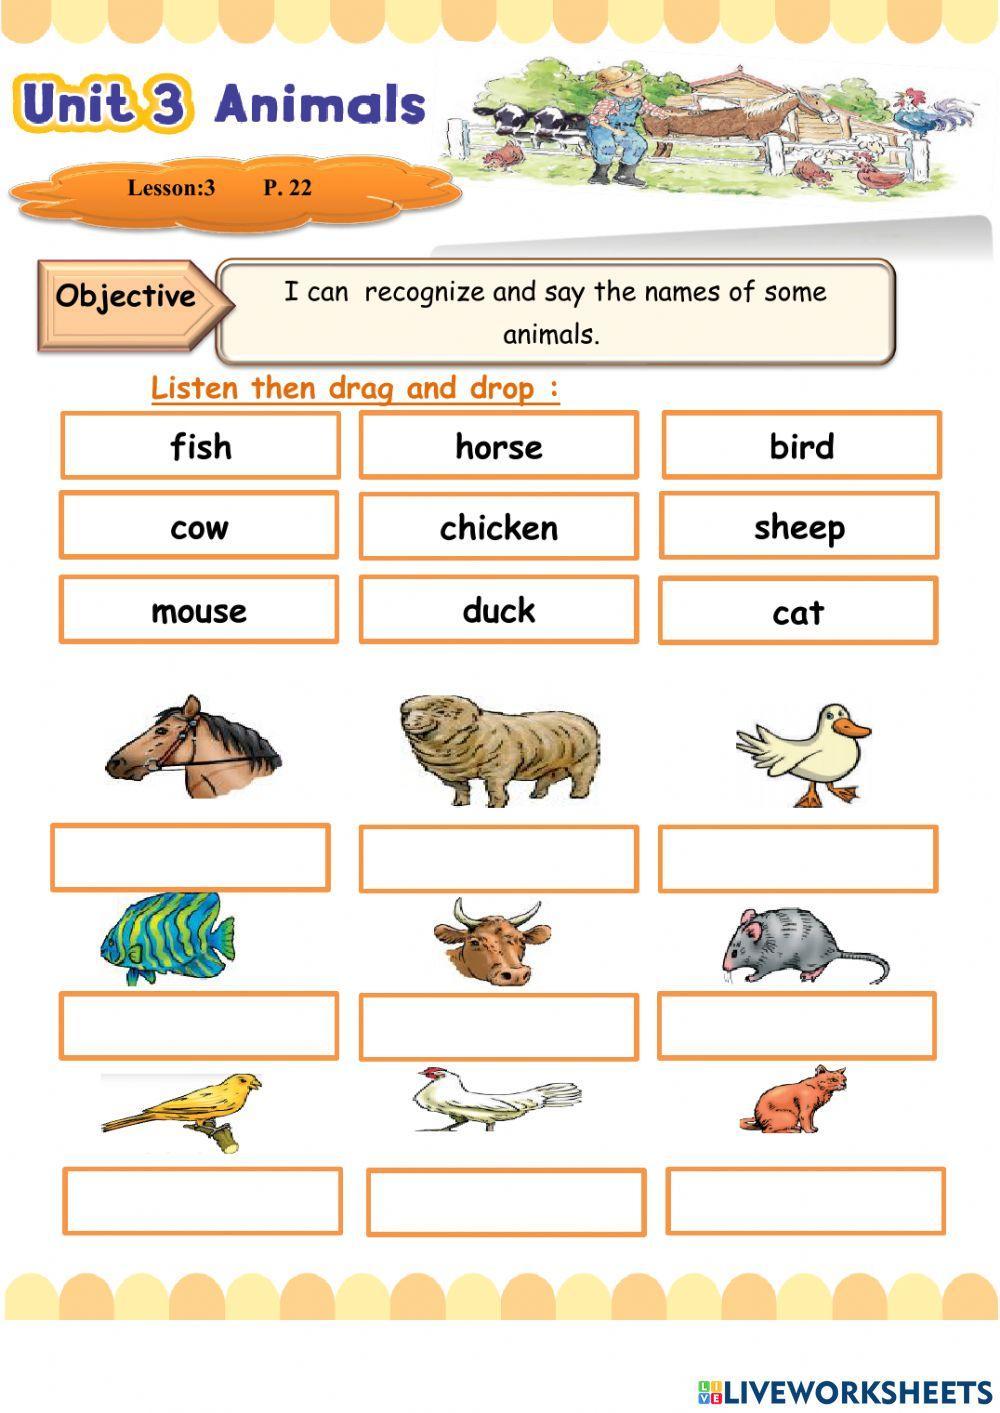 Animals worksheet - names of some animals